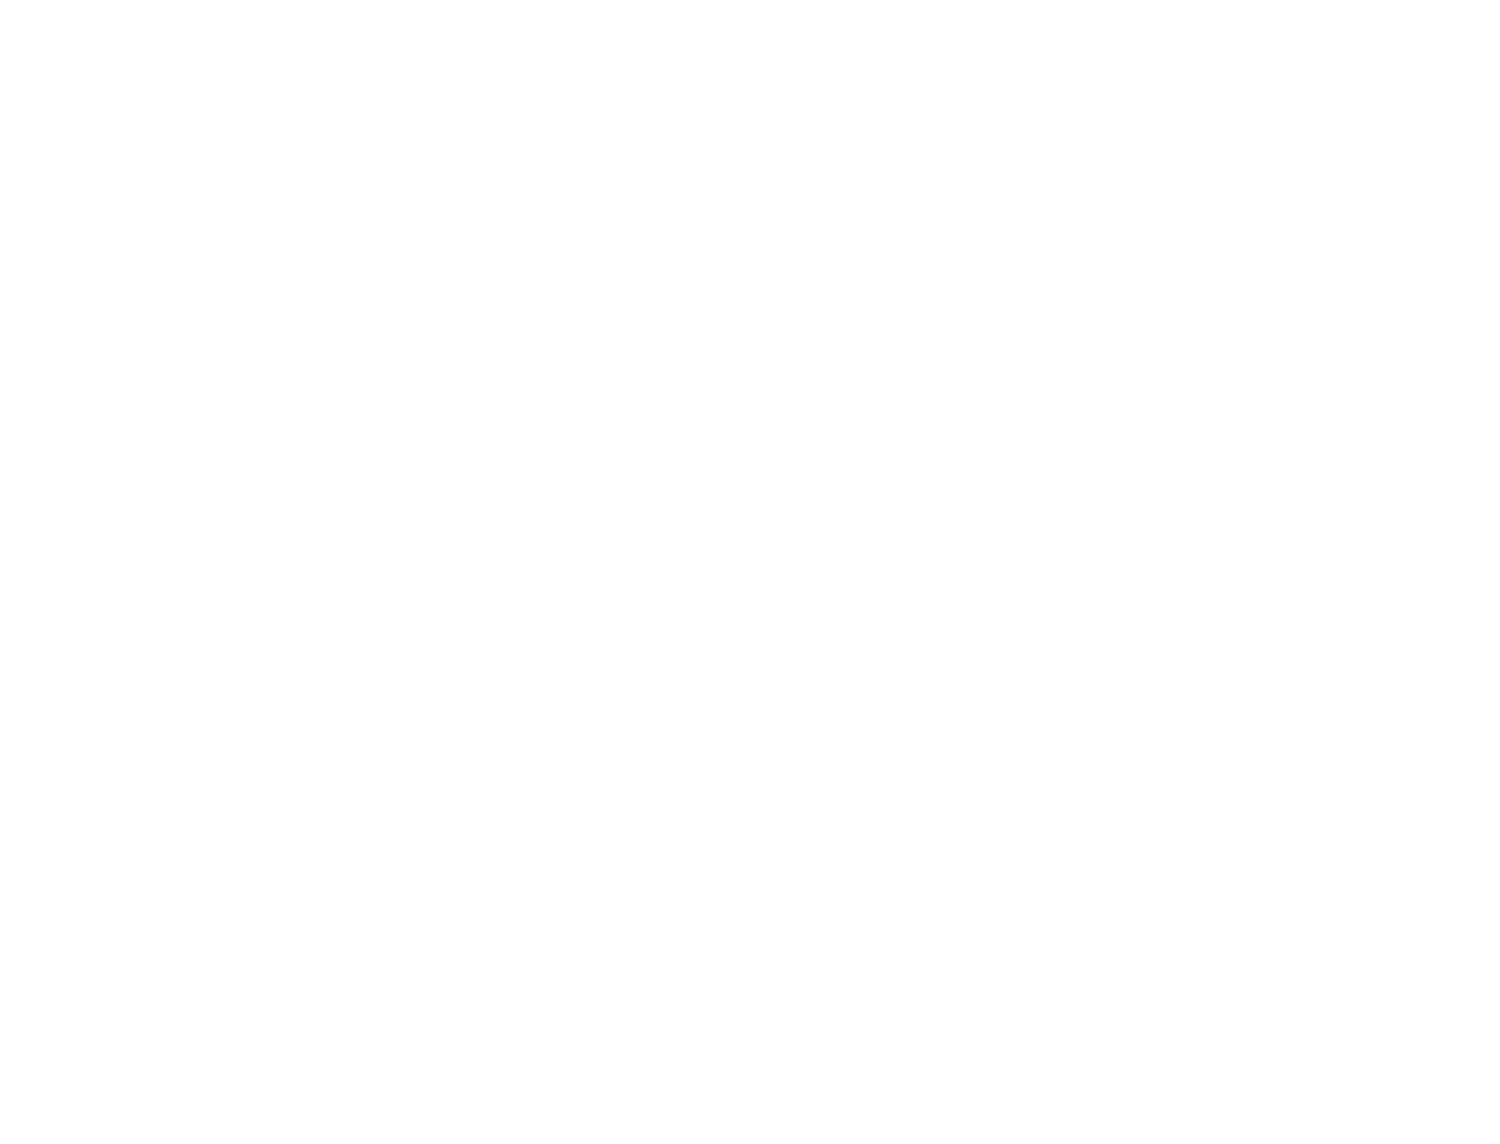 GOOD NEWS CHURCH